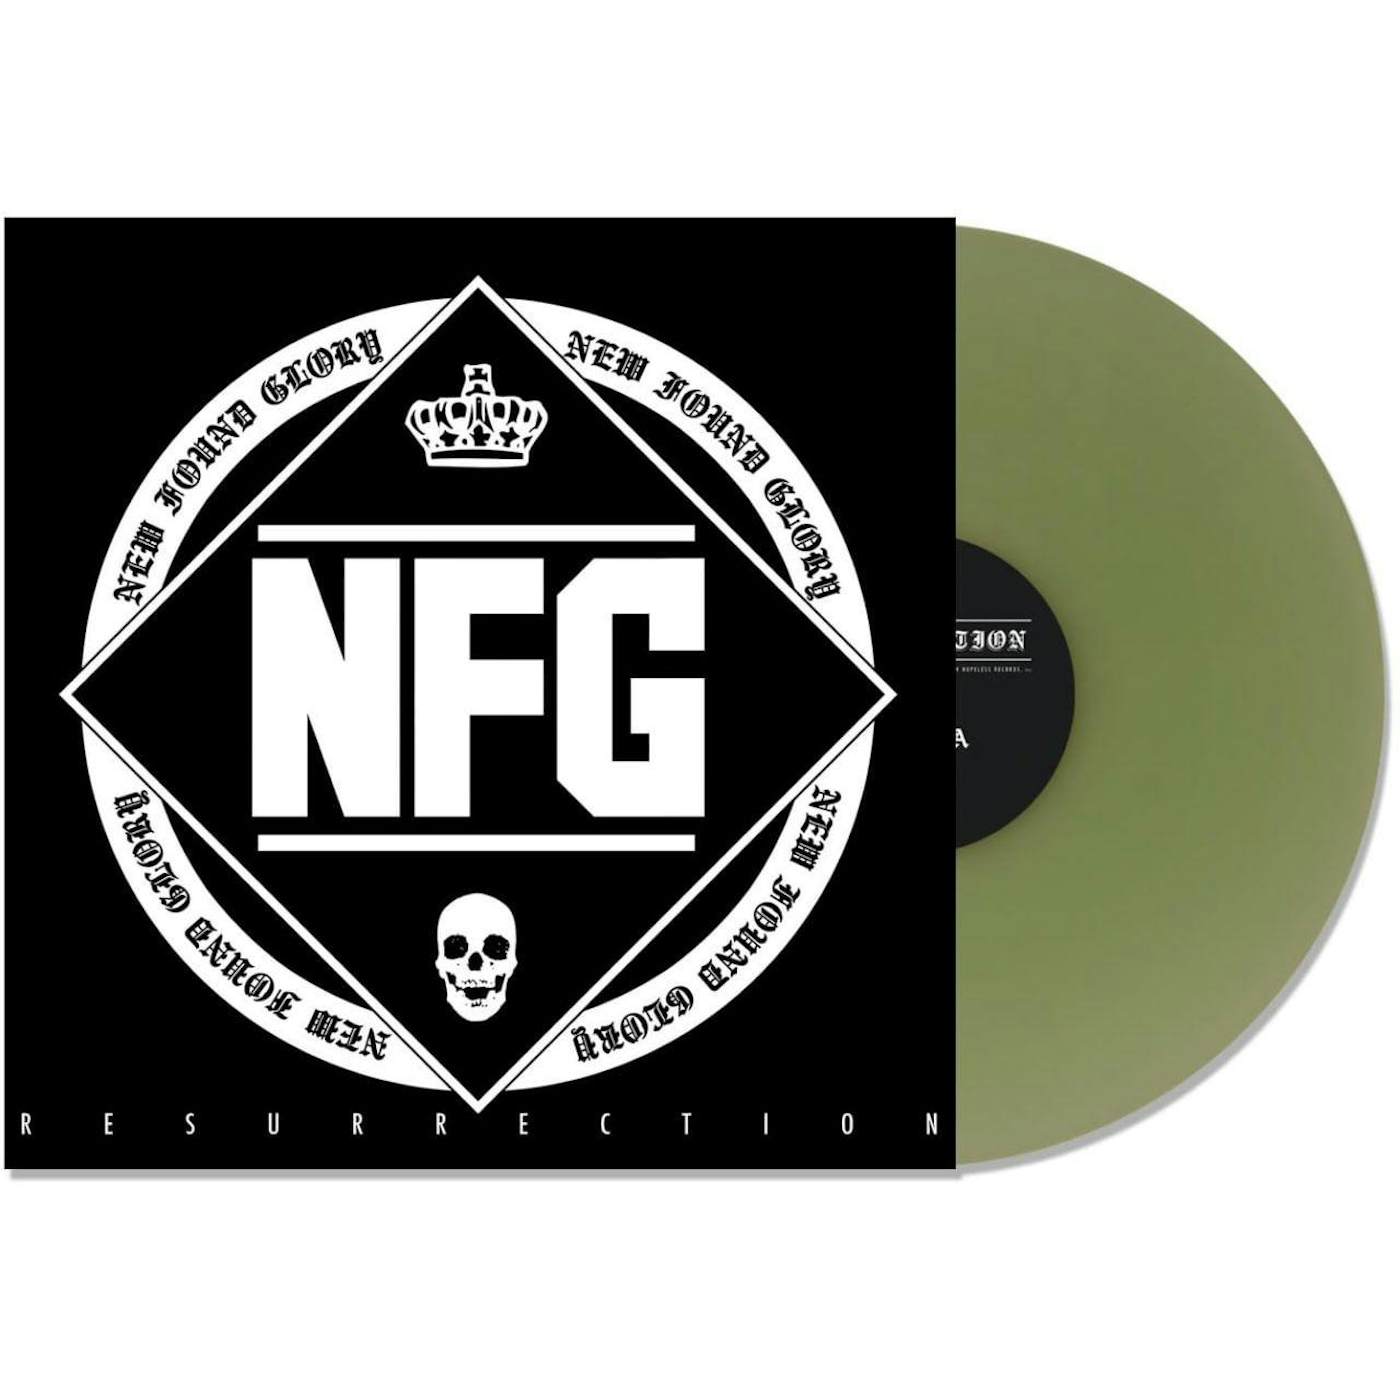 New Found Glory Resurrection (Coke Bottle Green) Vinyl Record